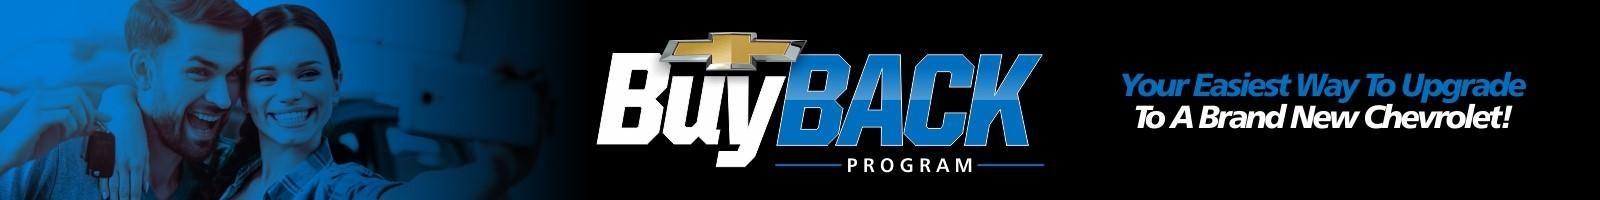 Chevy Buy Back Program at Sport Chevrolet in Silver Spring MD